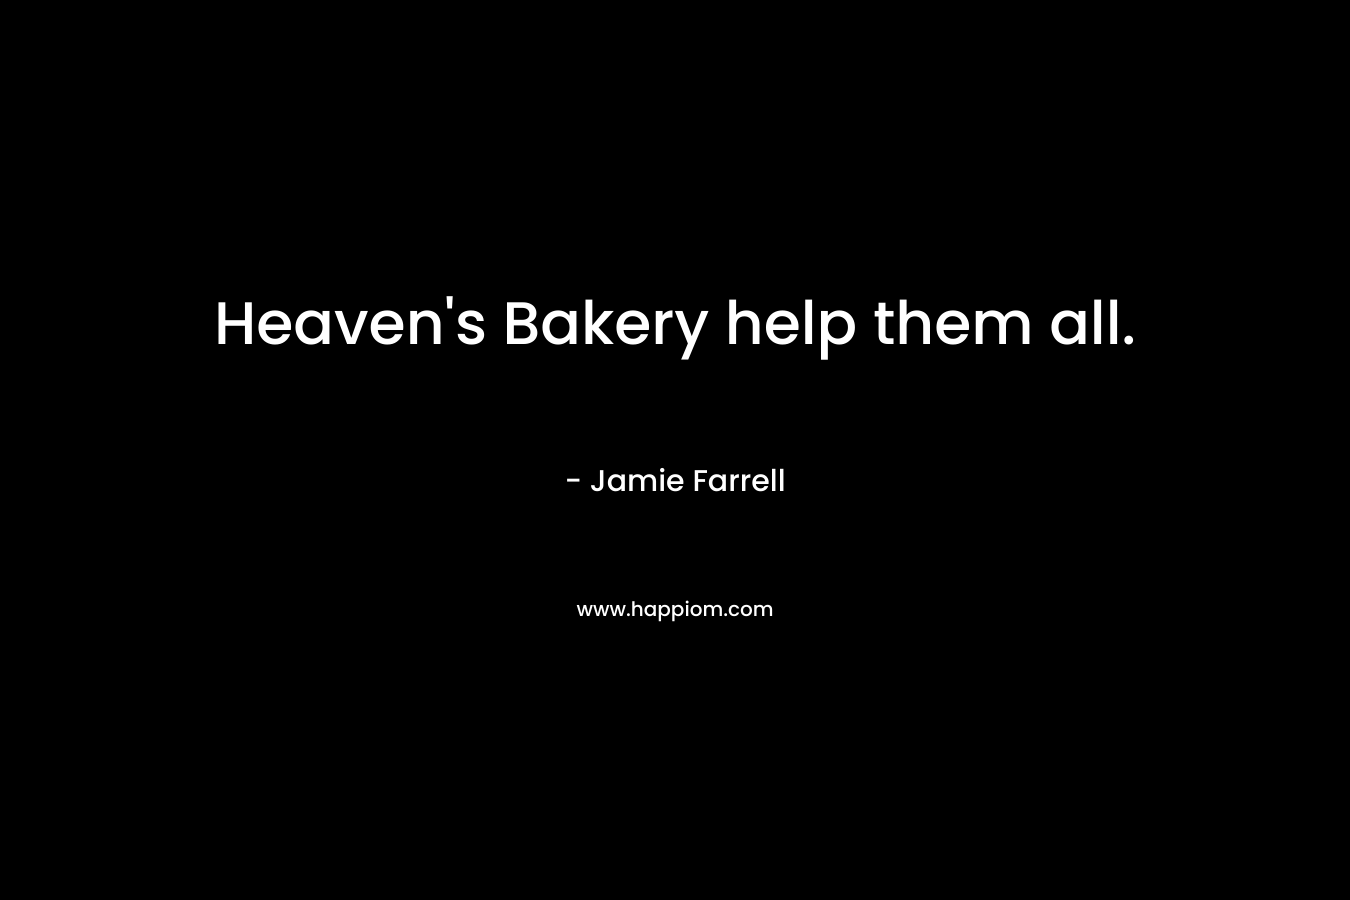 Heaven's Bakery help them all.